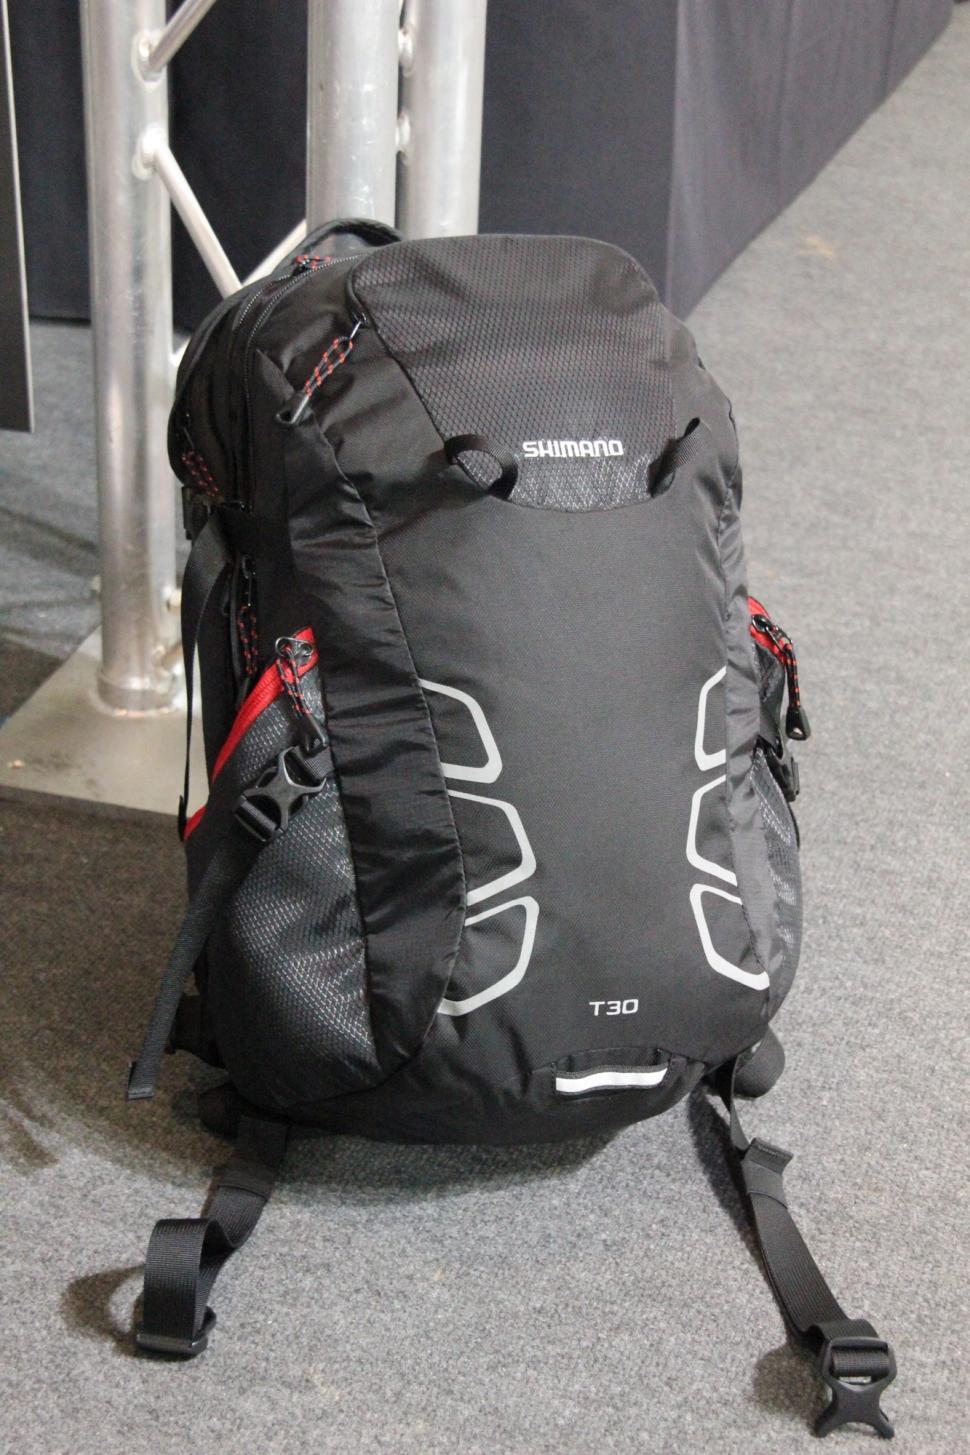 Sneak peek: Shimano launch their first ever bag range